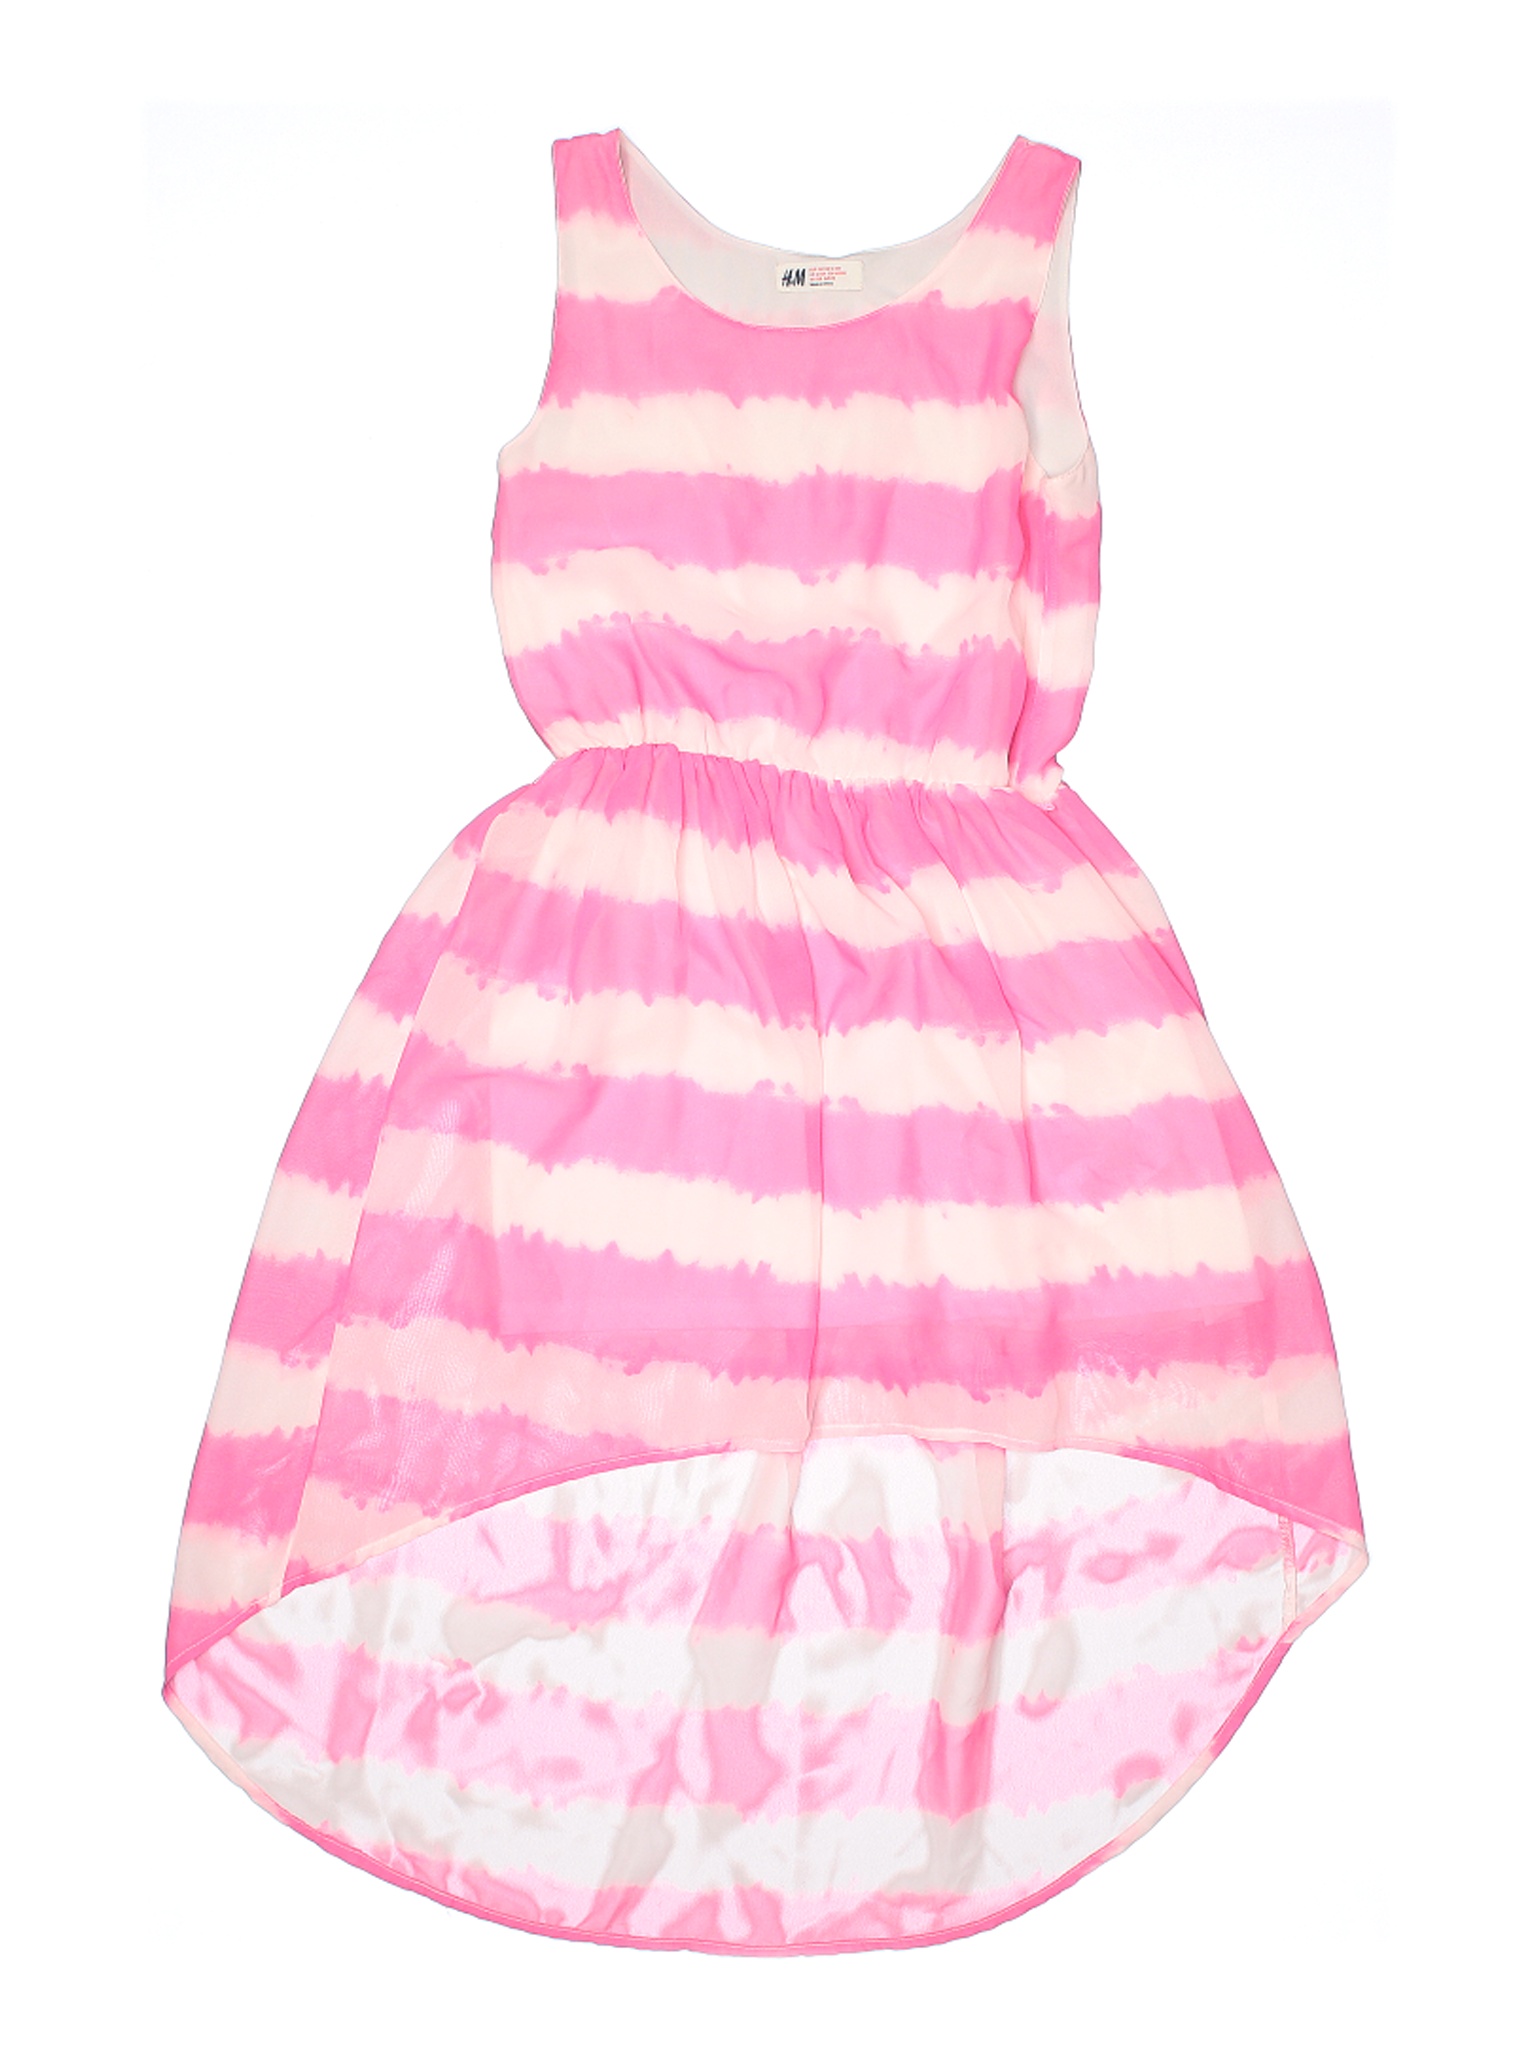 H&M Girls Pink Dress 12 | eBay